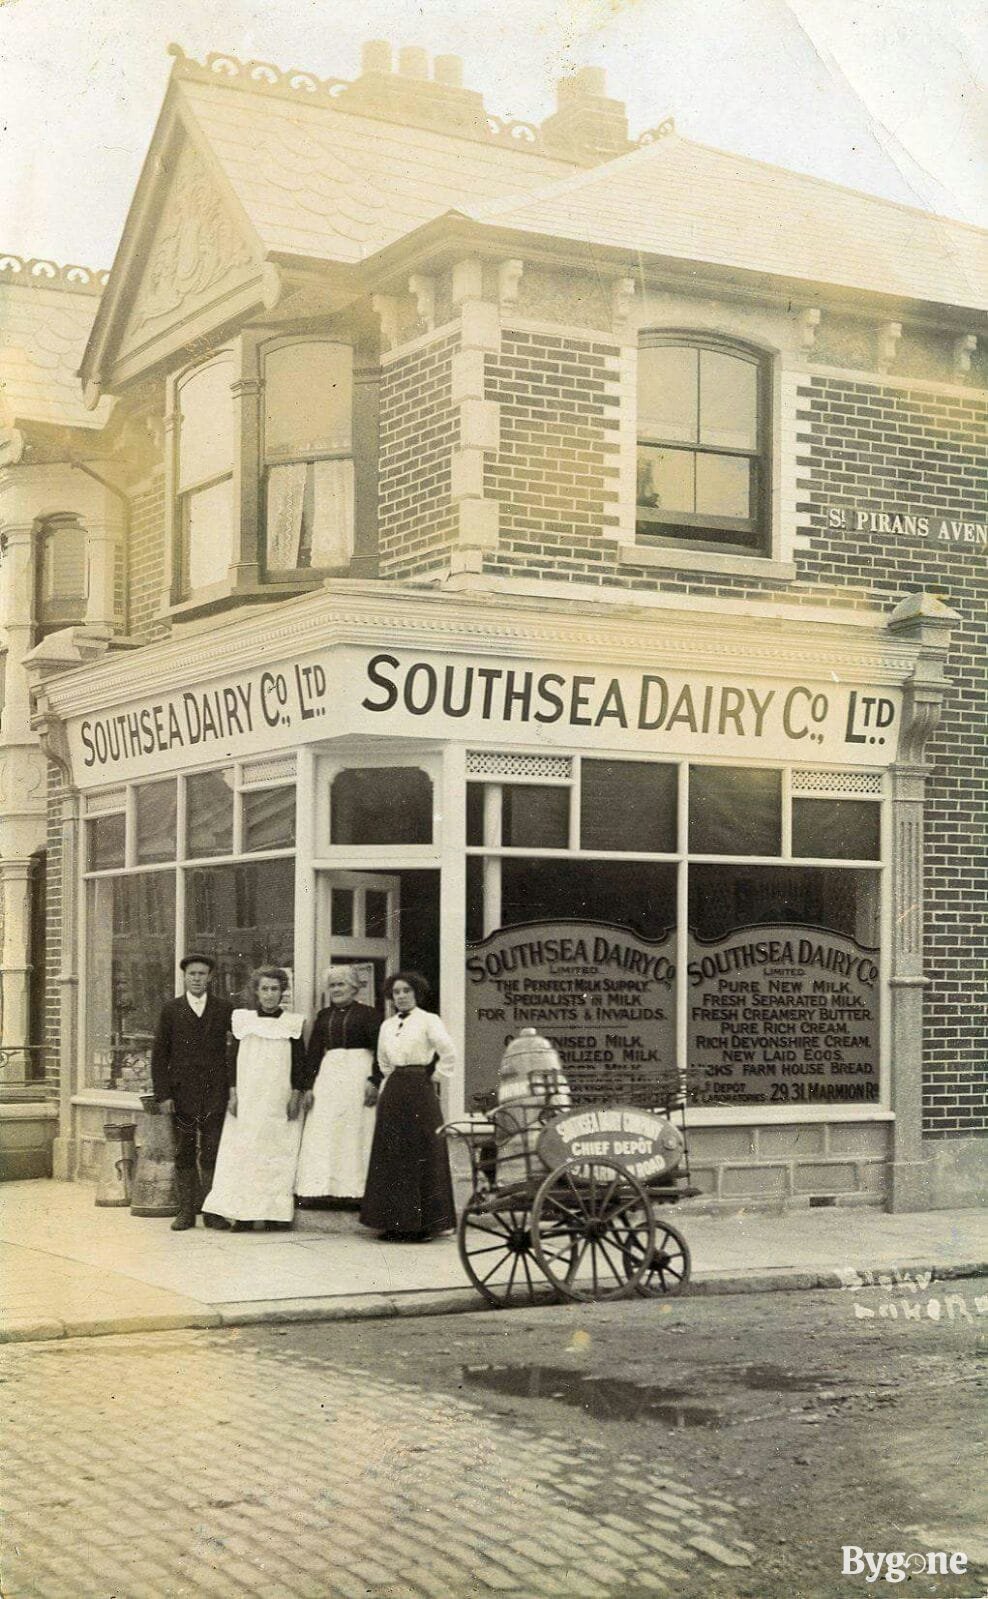 Southsea Dairy Company, St. Pirans Avenue